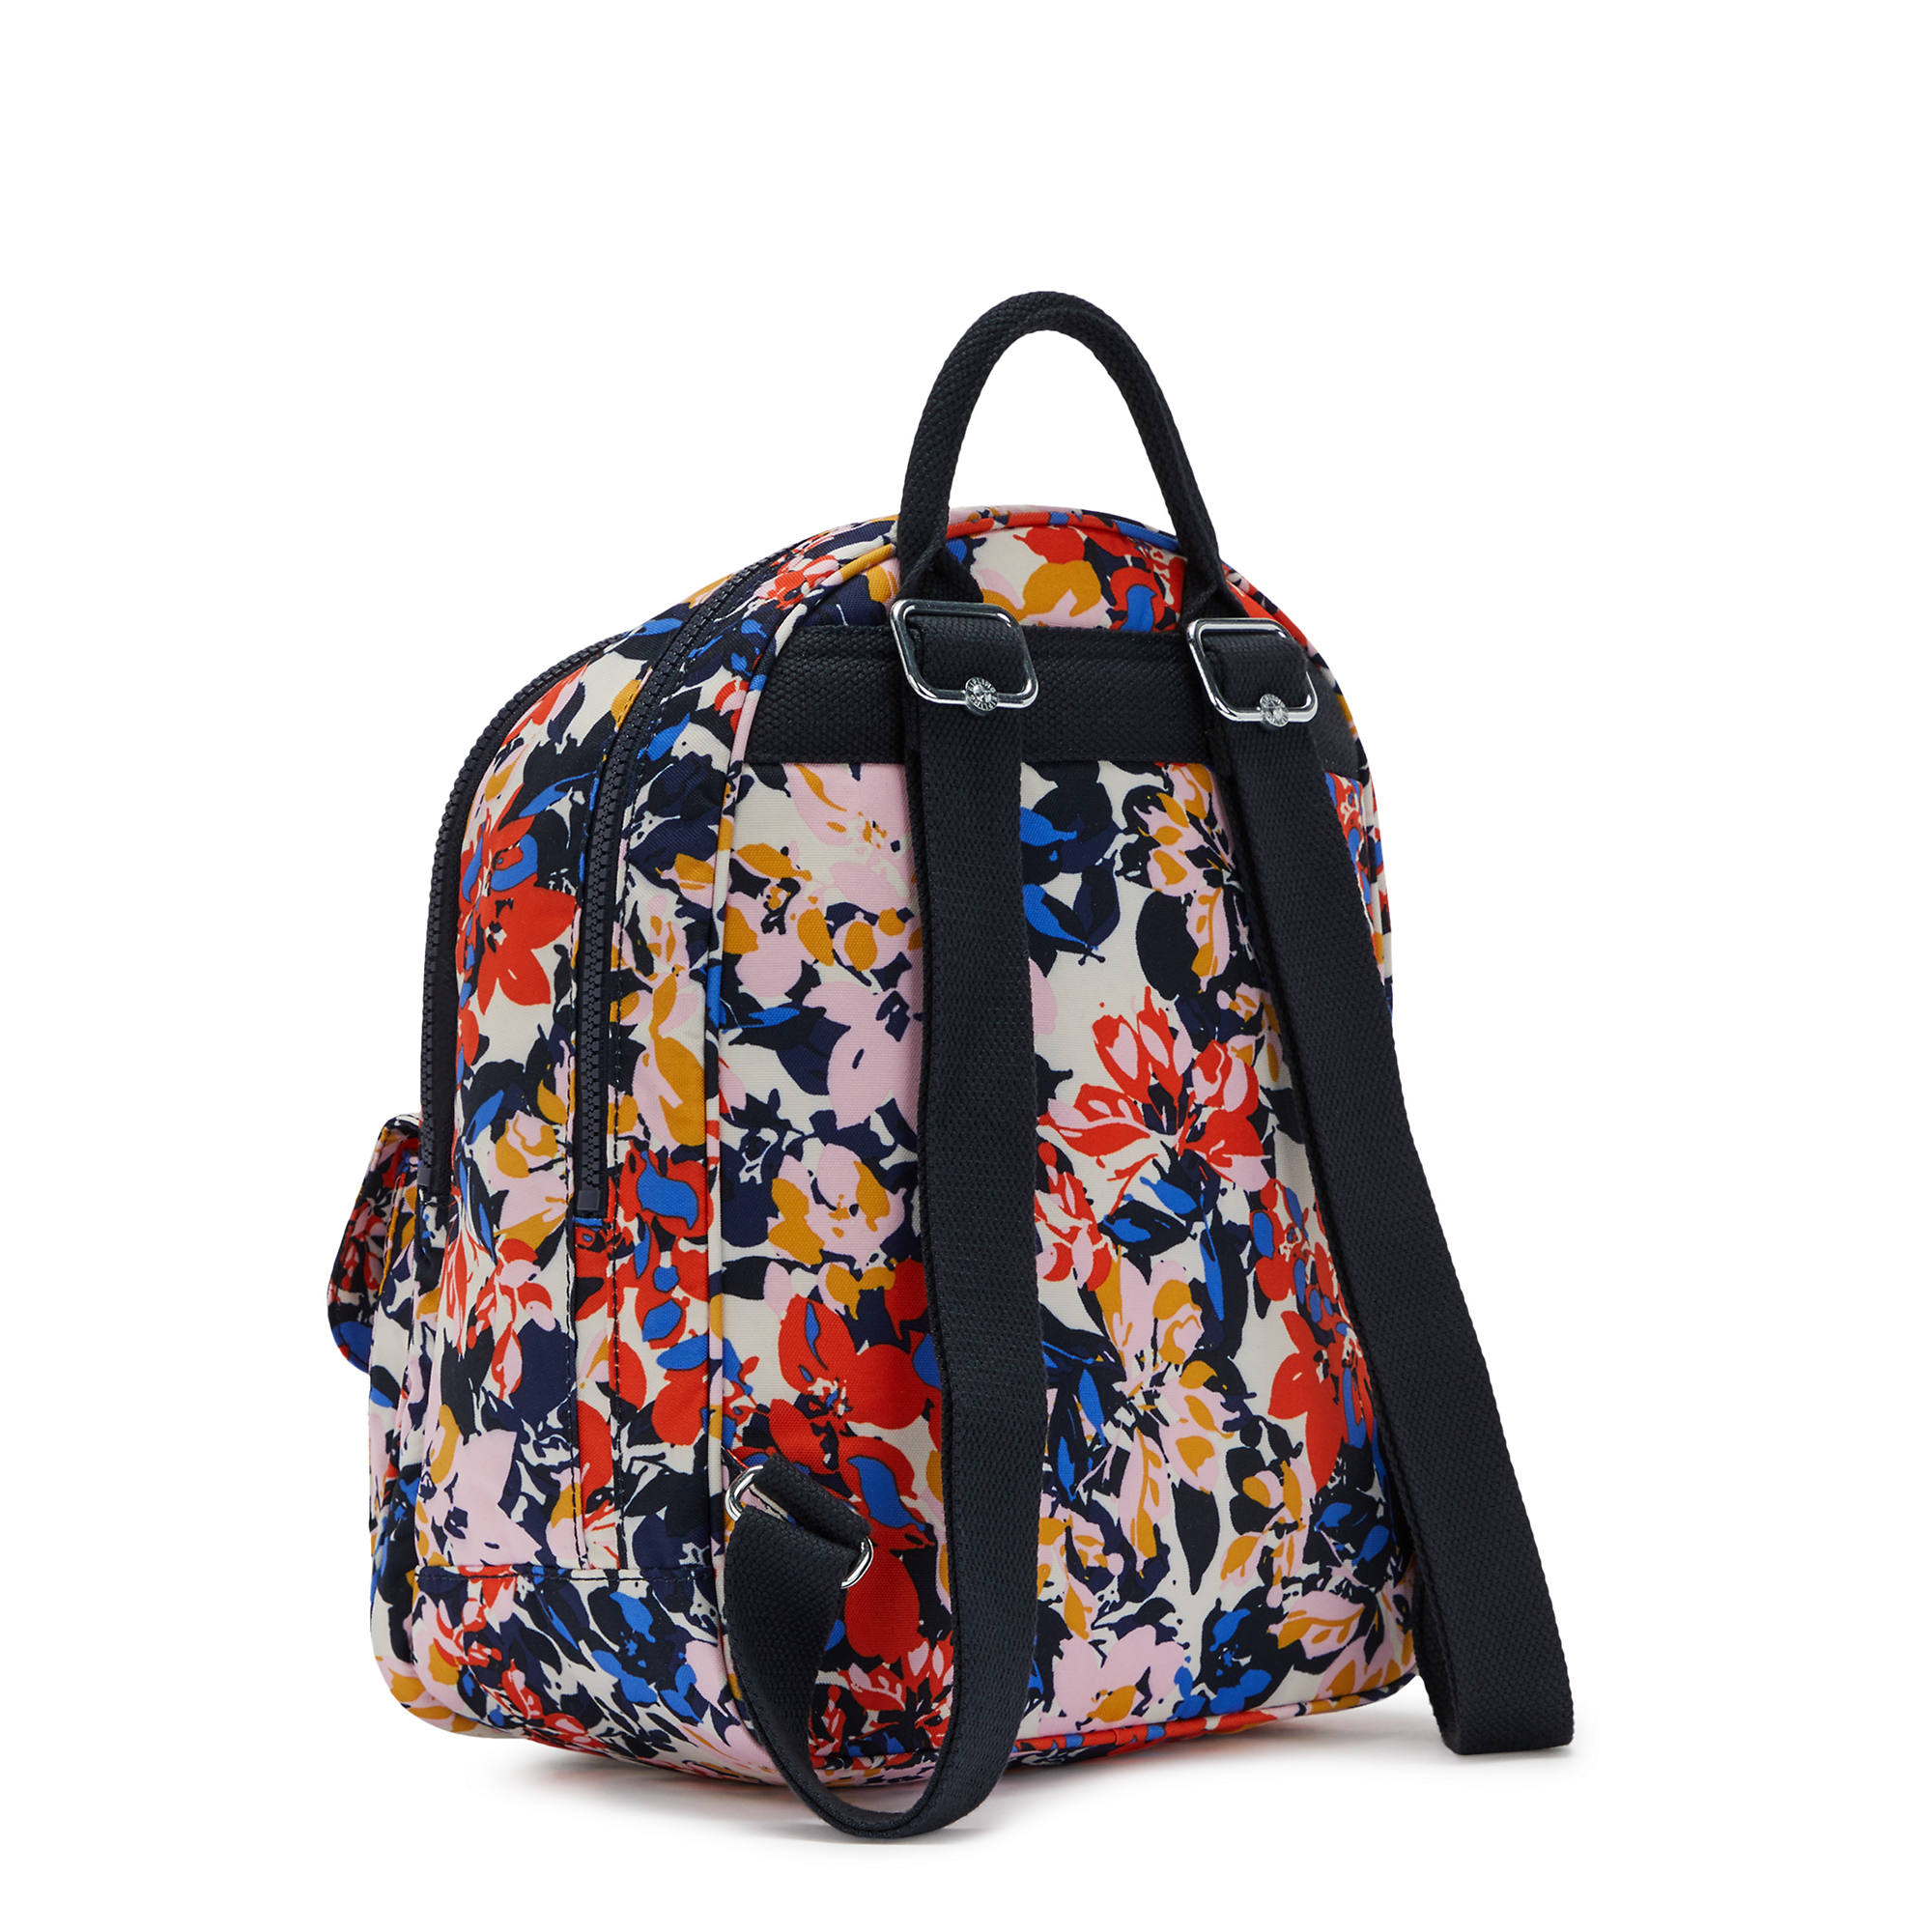 Kipling Rose Small Backpack Splashy Posies 882256436518 | eBay